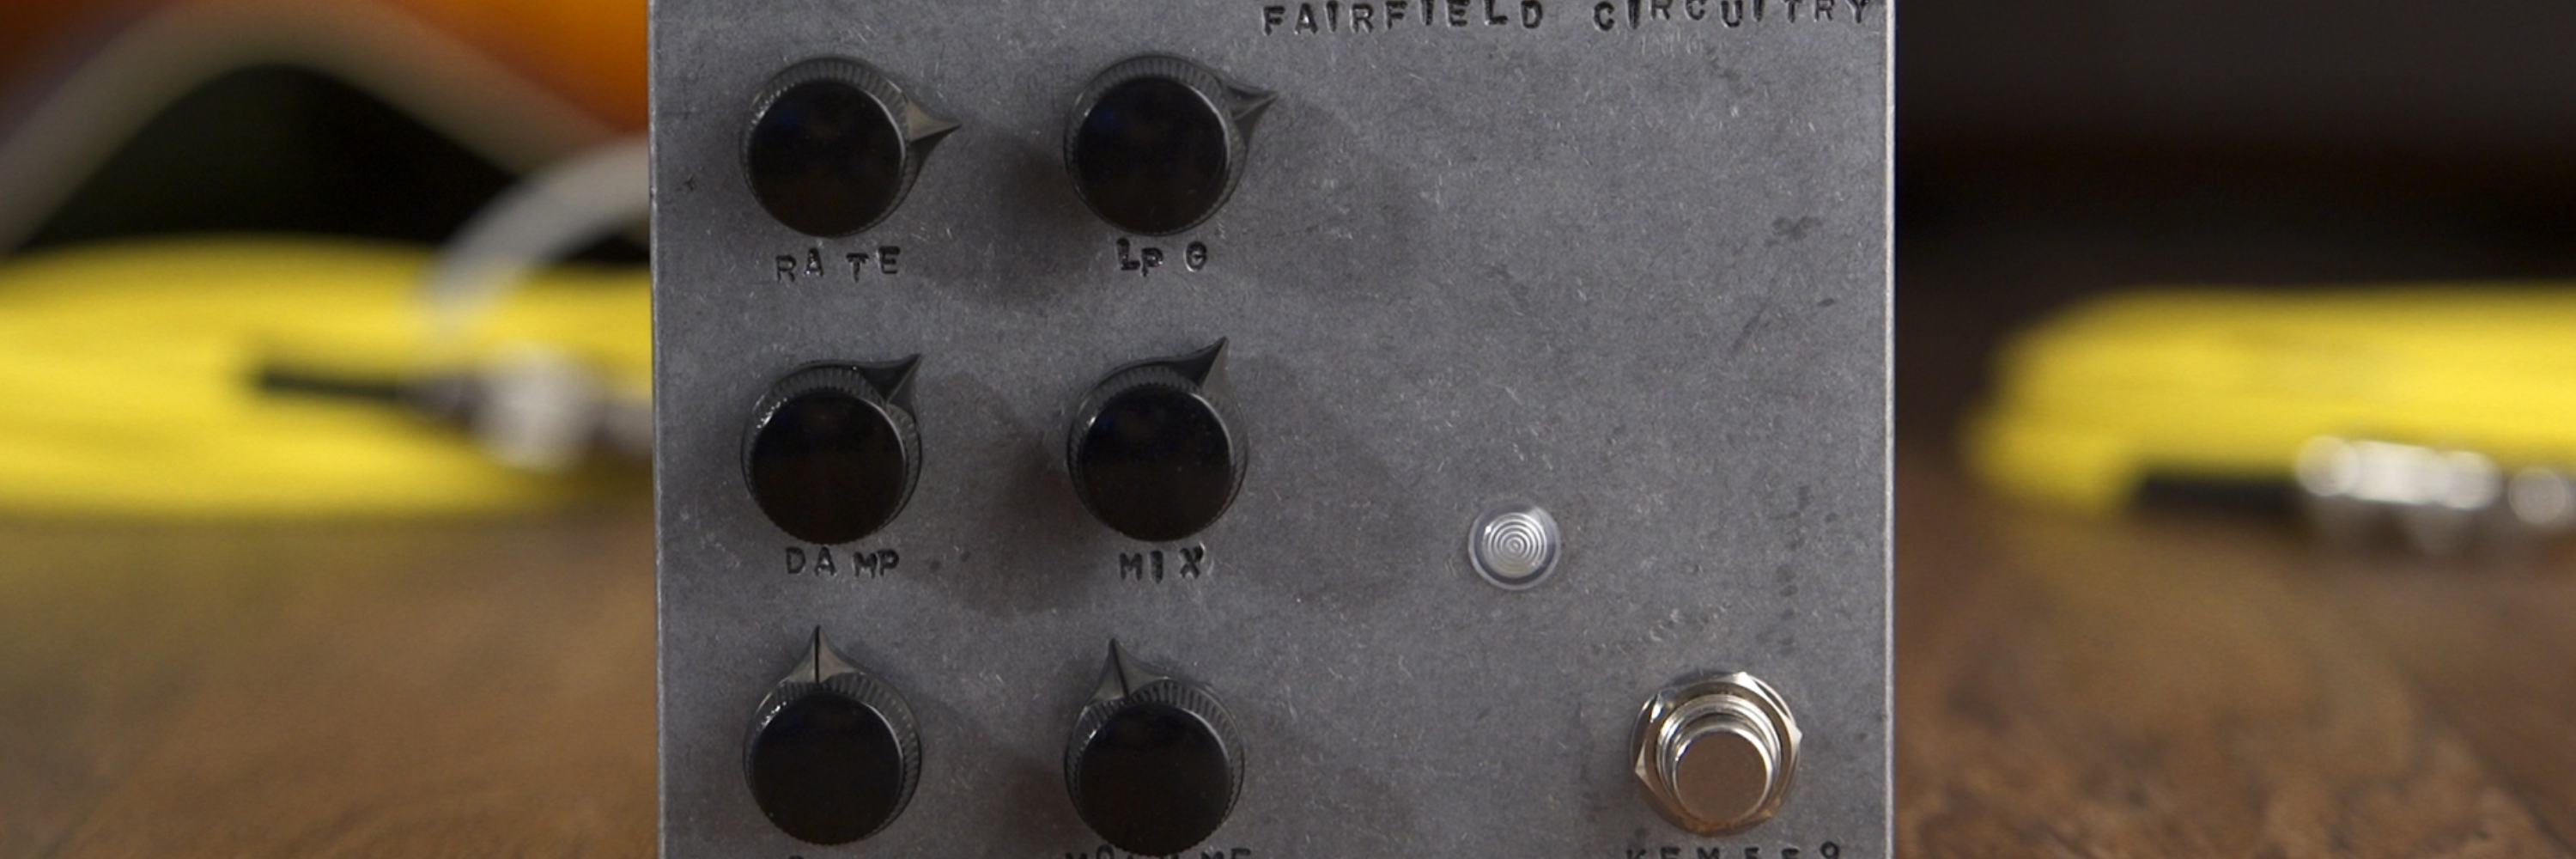 Fairfield Circuitry Shallow Water K-Field Modulator Demo